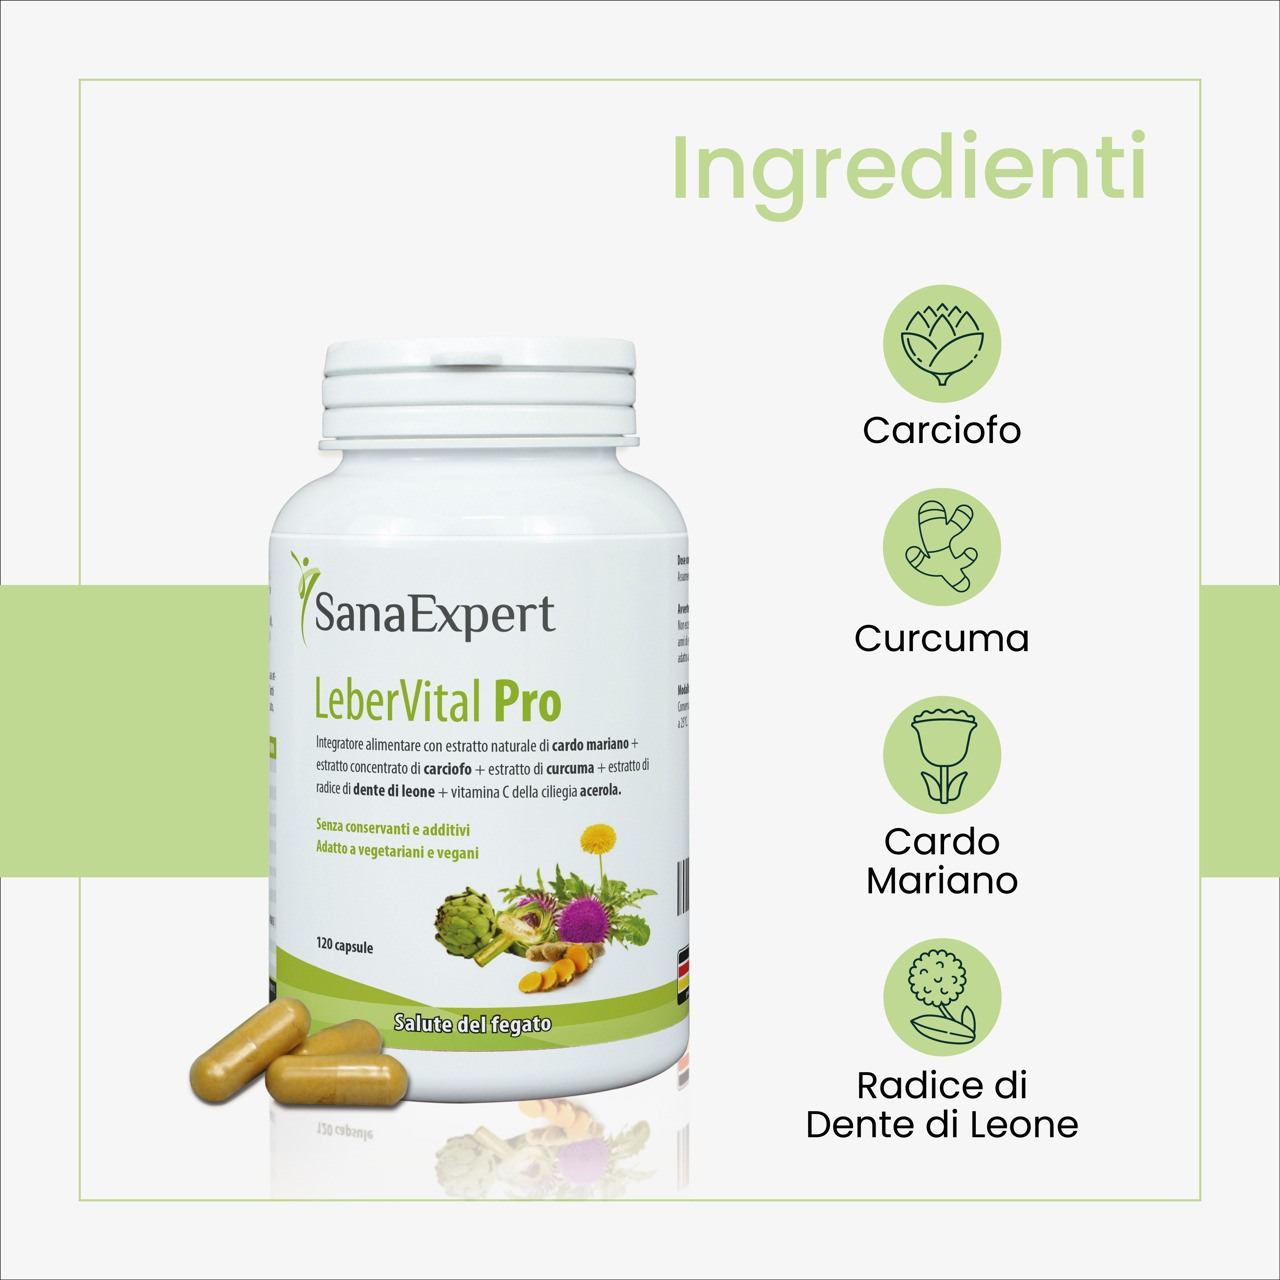 SanaExpert LeberVital Pro ingredienti